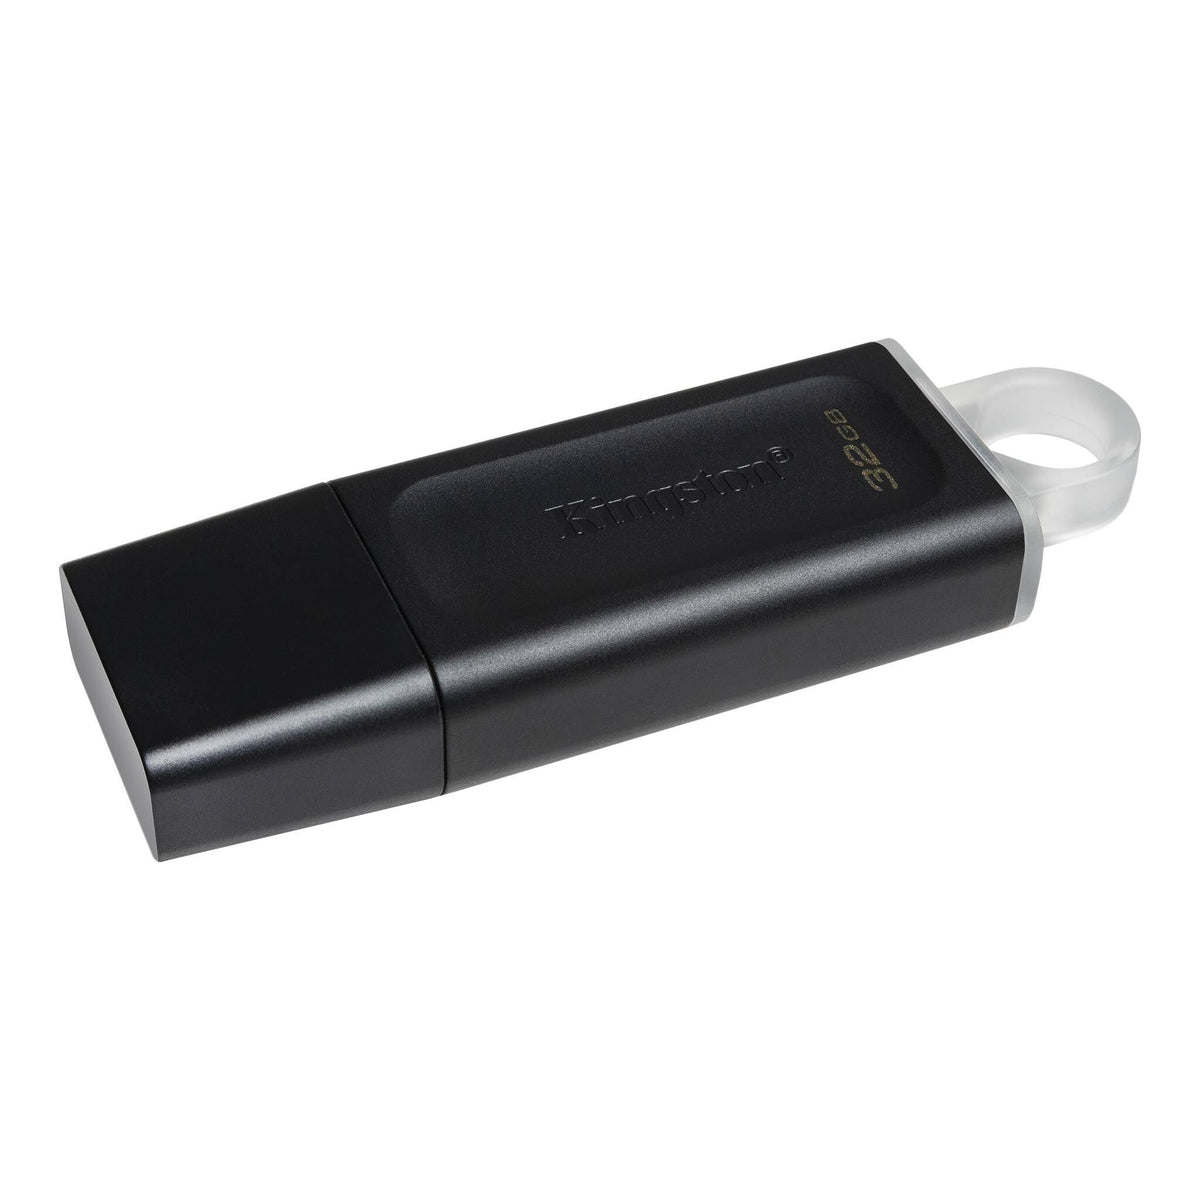 USB kľúč 32GB Kingston DT Exodia, 3.2 (DTX/32GB)